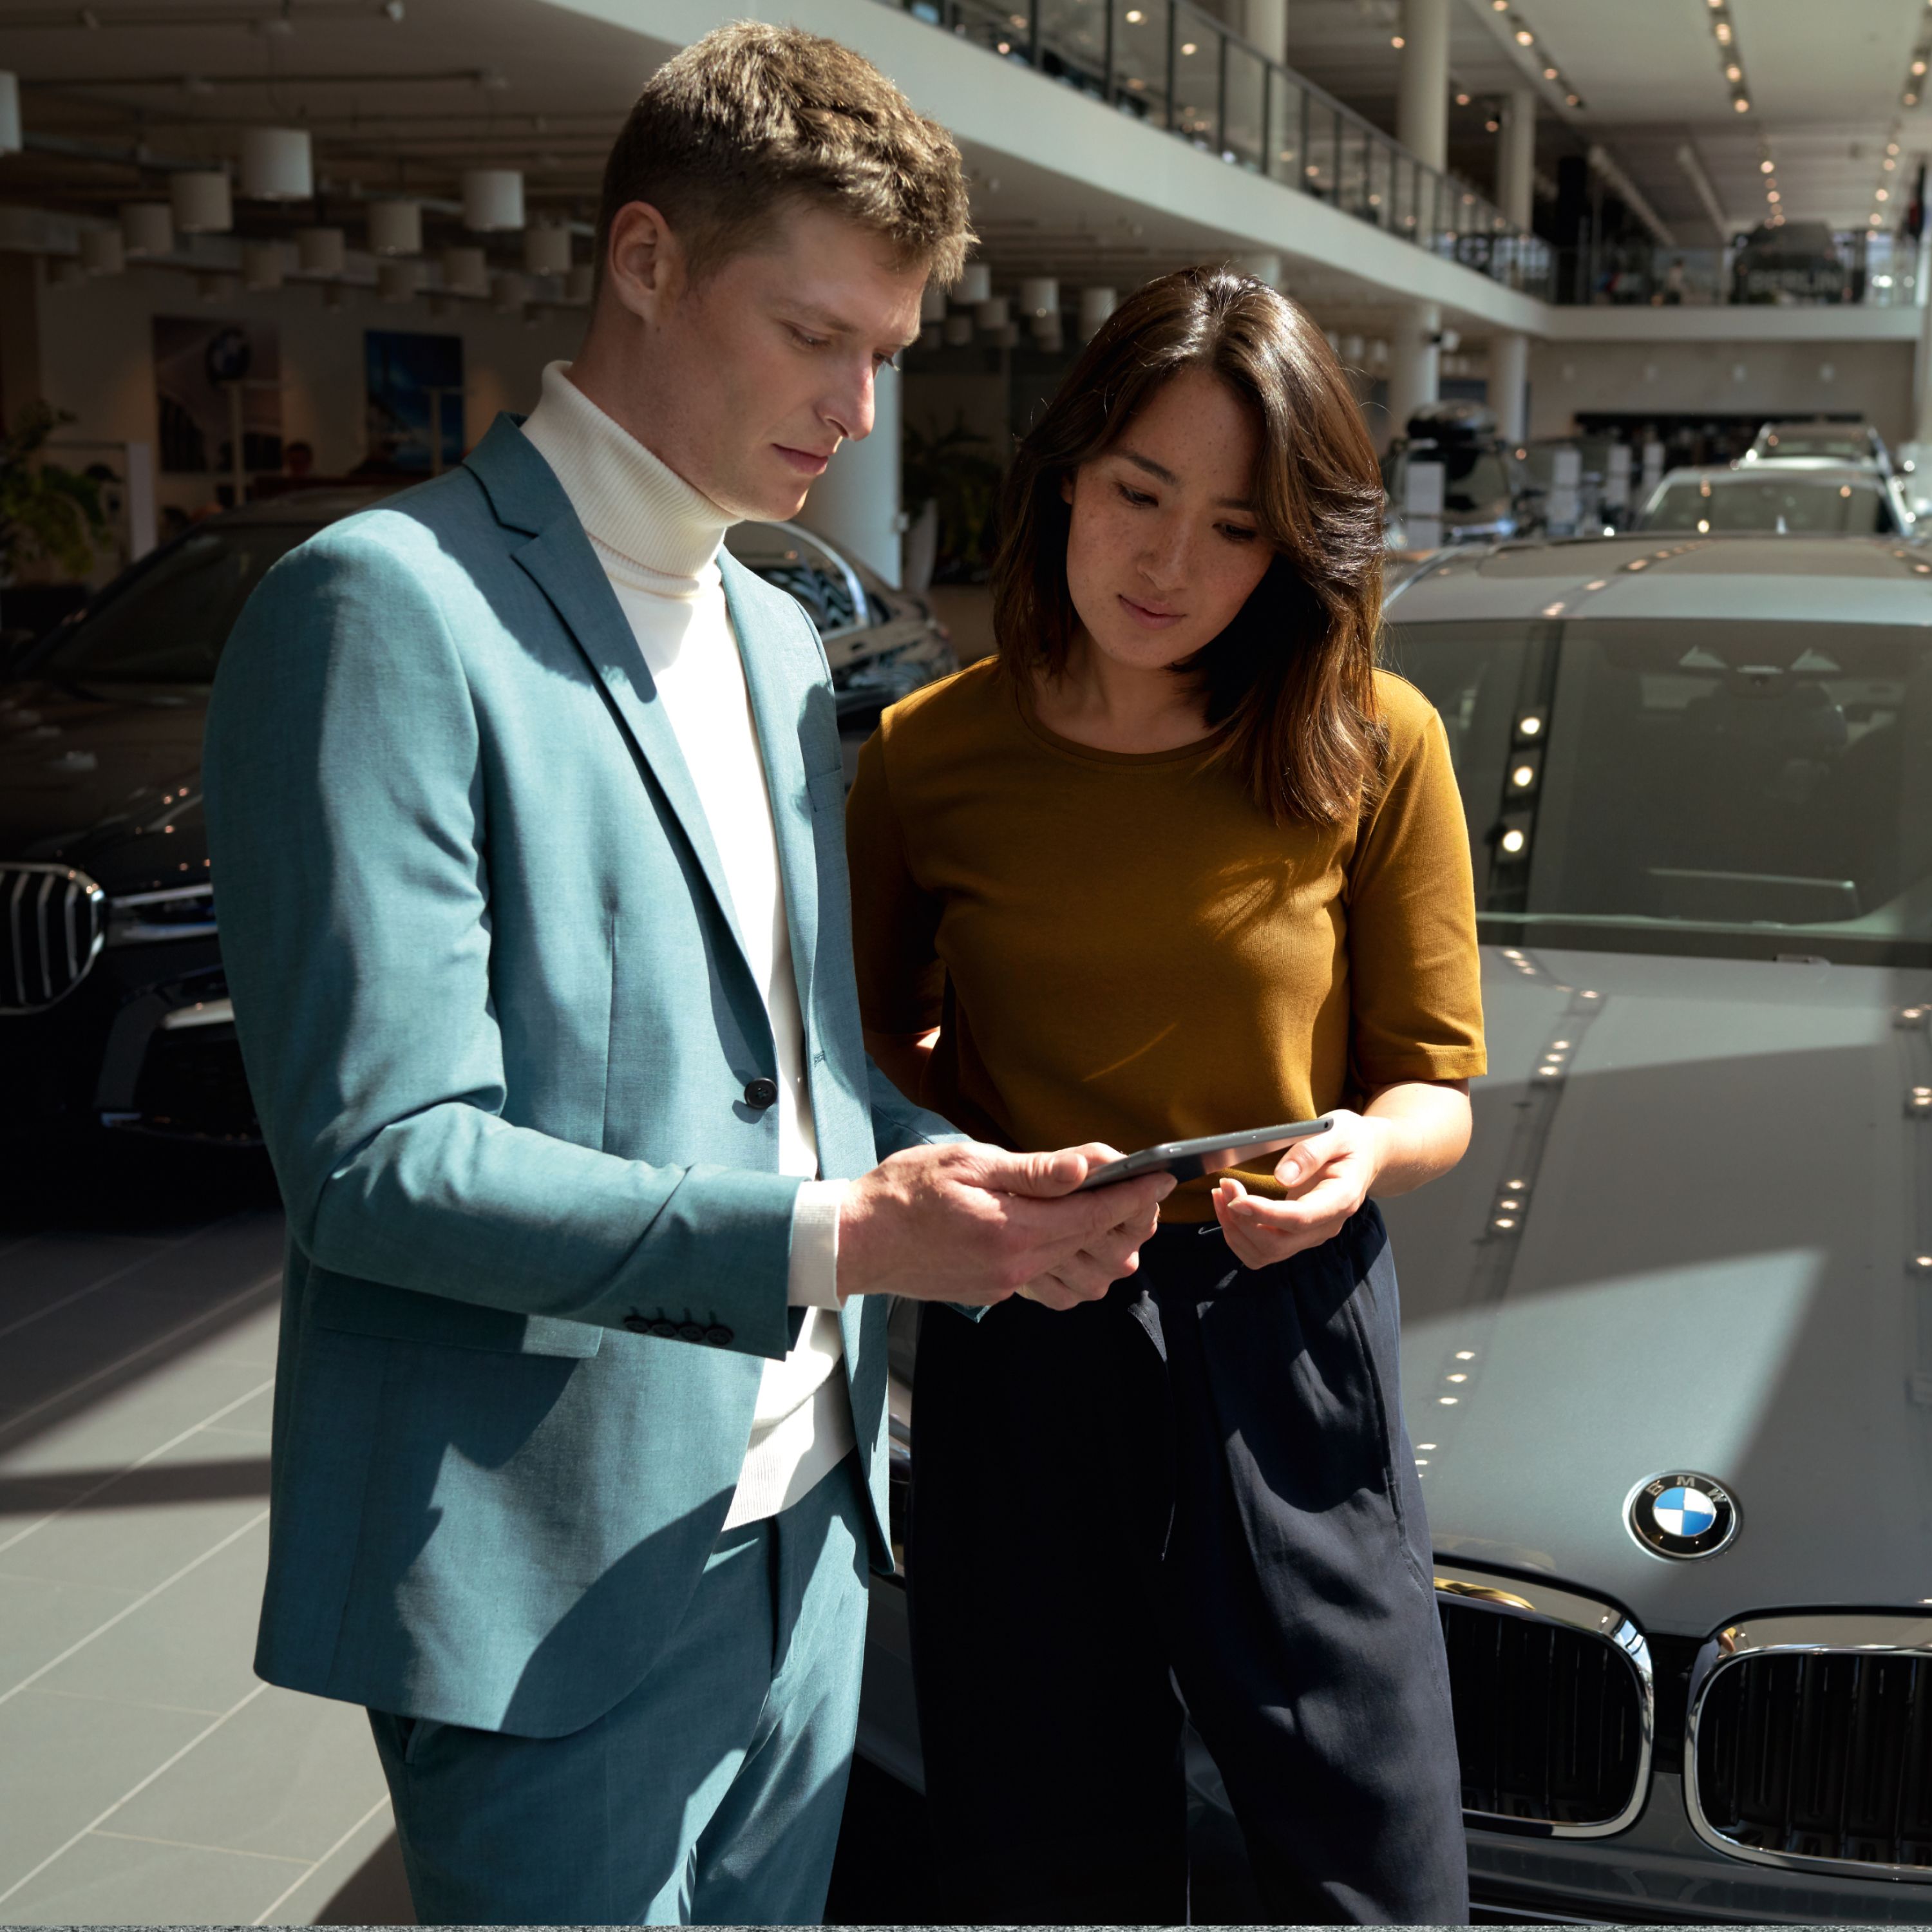 BMW public charging Advice BMW Service Partner